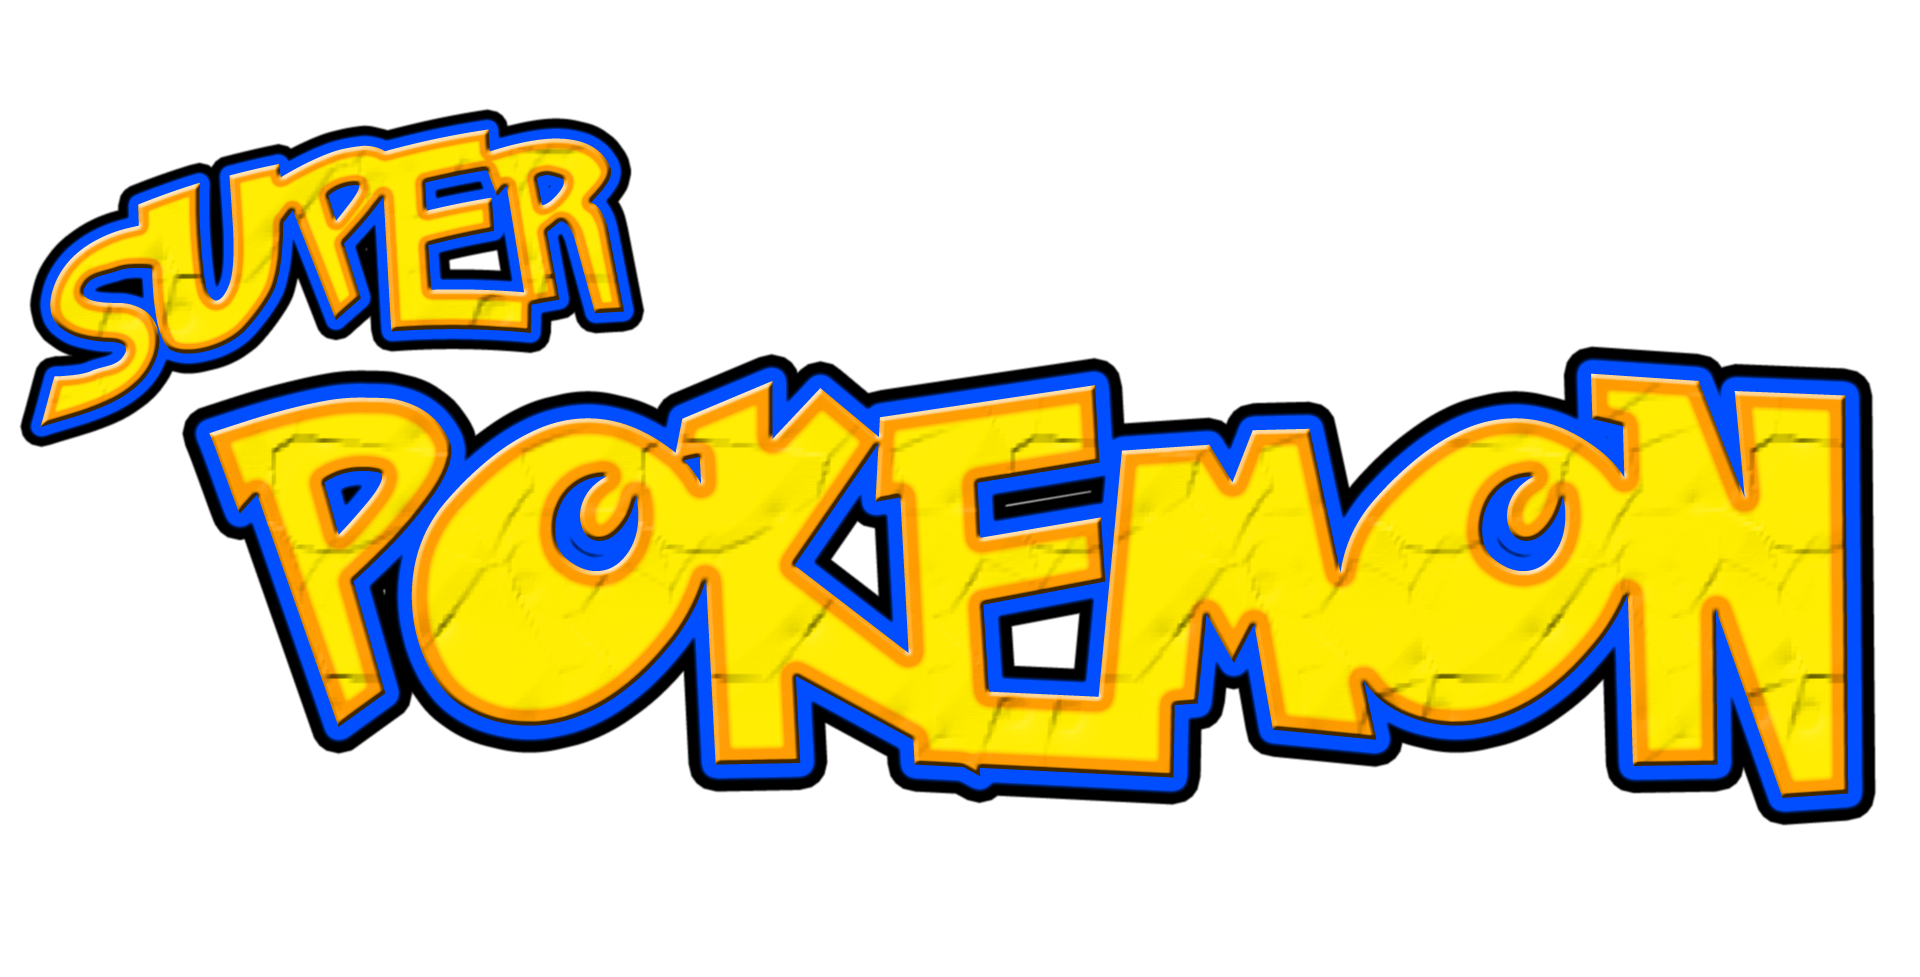 Download Team Plasma Logo - Pokemon Team Plasma PNG Image with No  Background - PNGkey.com